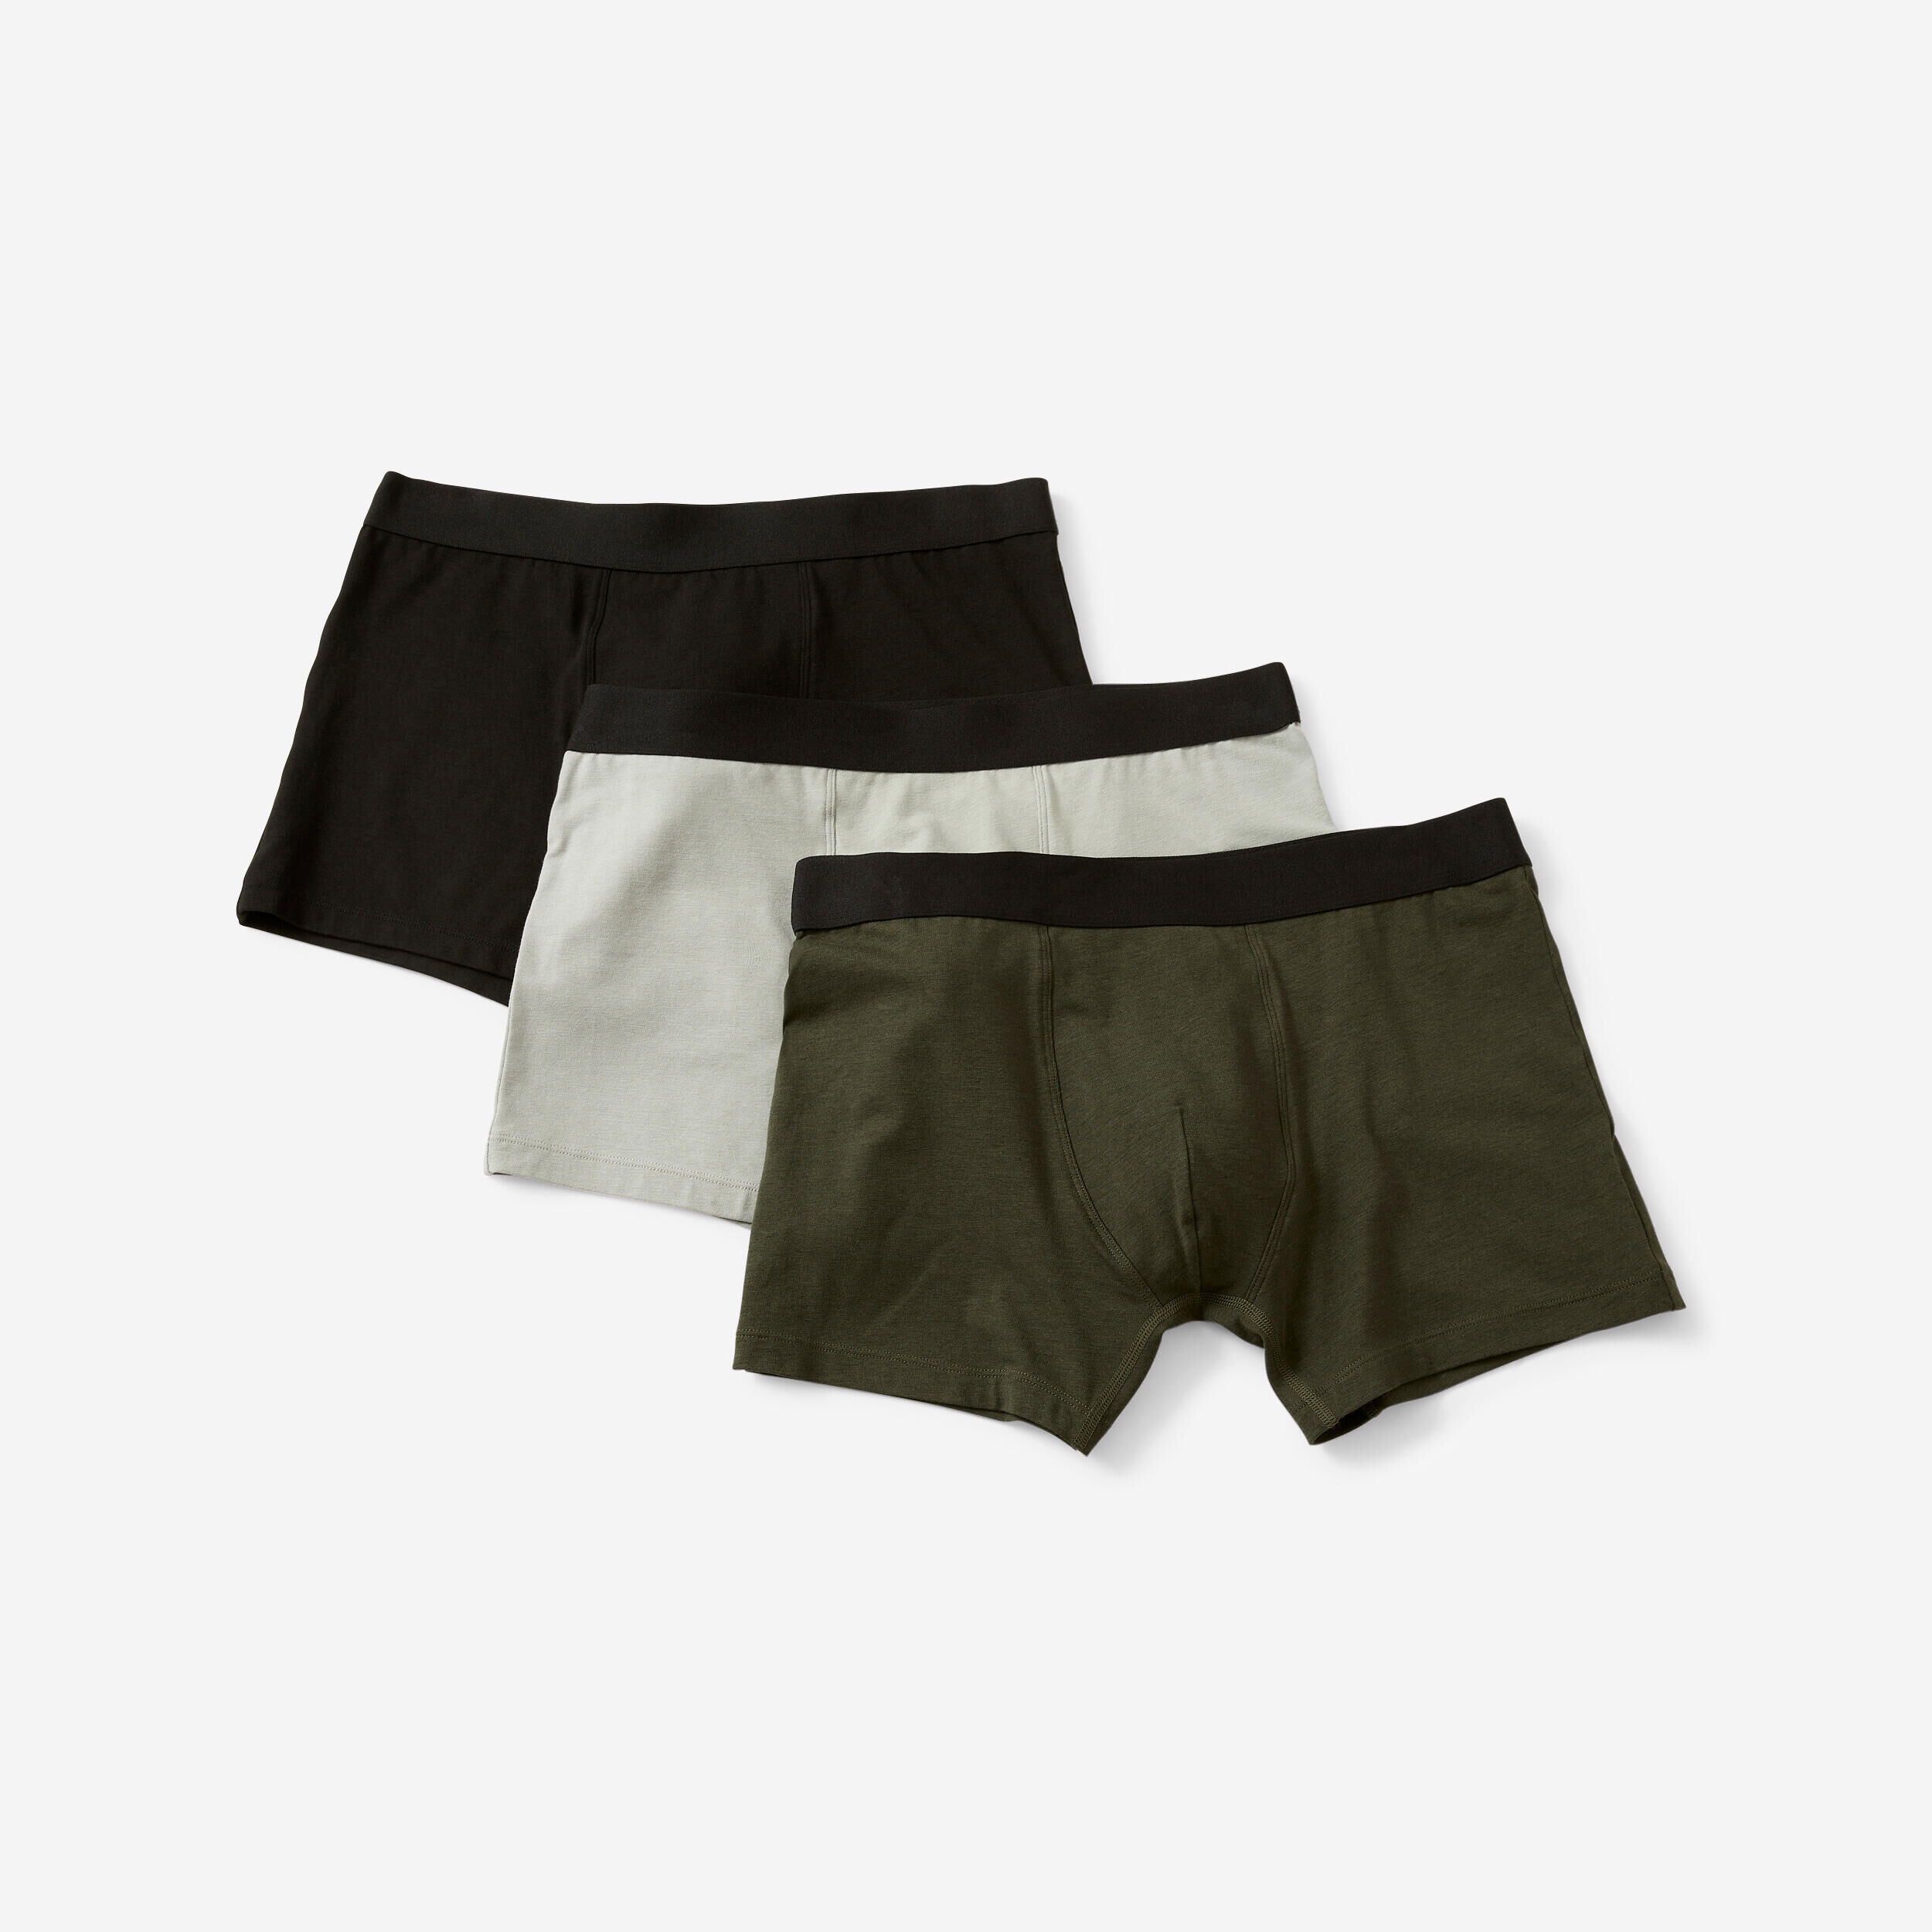 DOMYOS Men's Fitness Boxer Shorts 500 Tri-Pack - Black/Grey/Dark Green